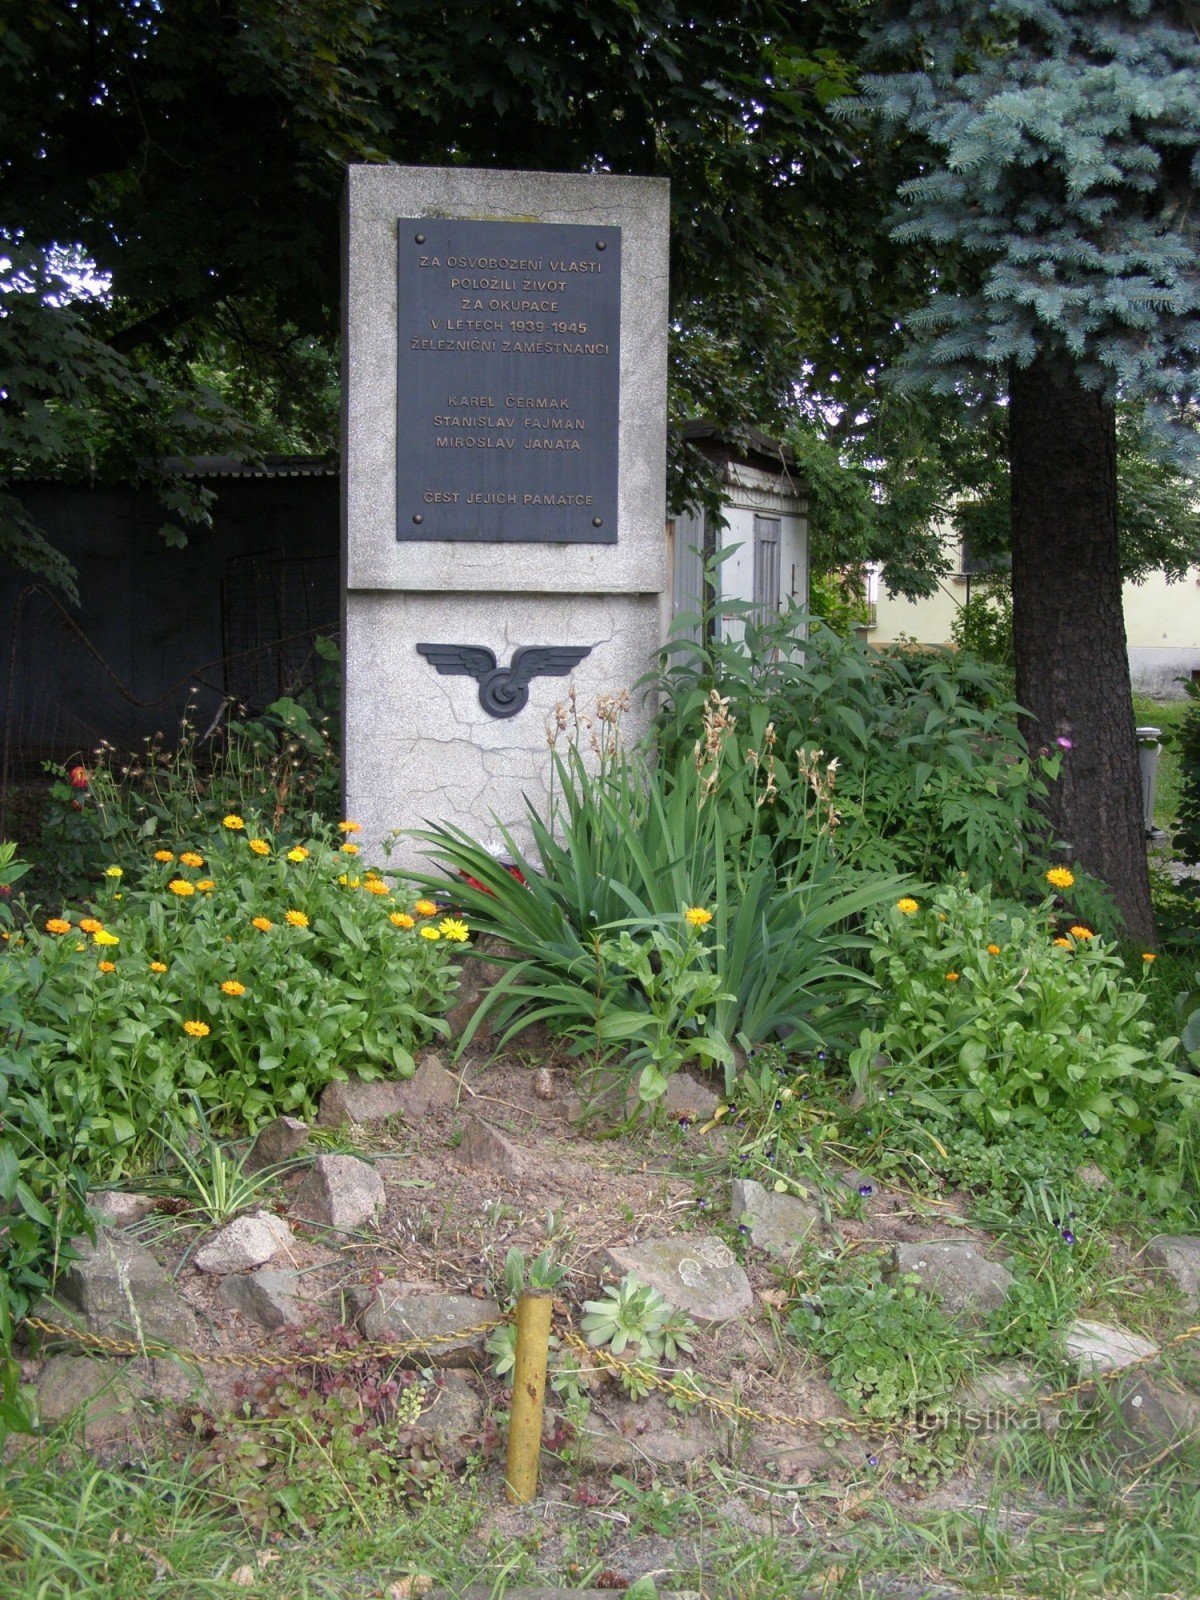 Jaroměř - järnvägsmännens monument